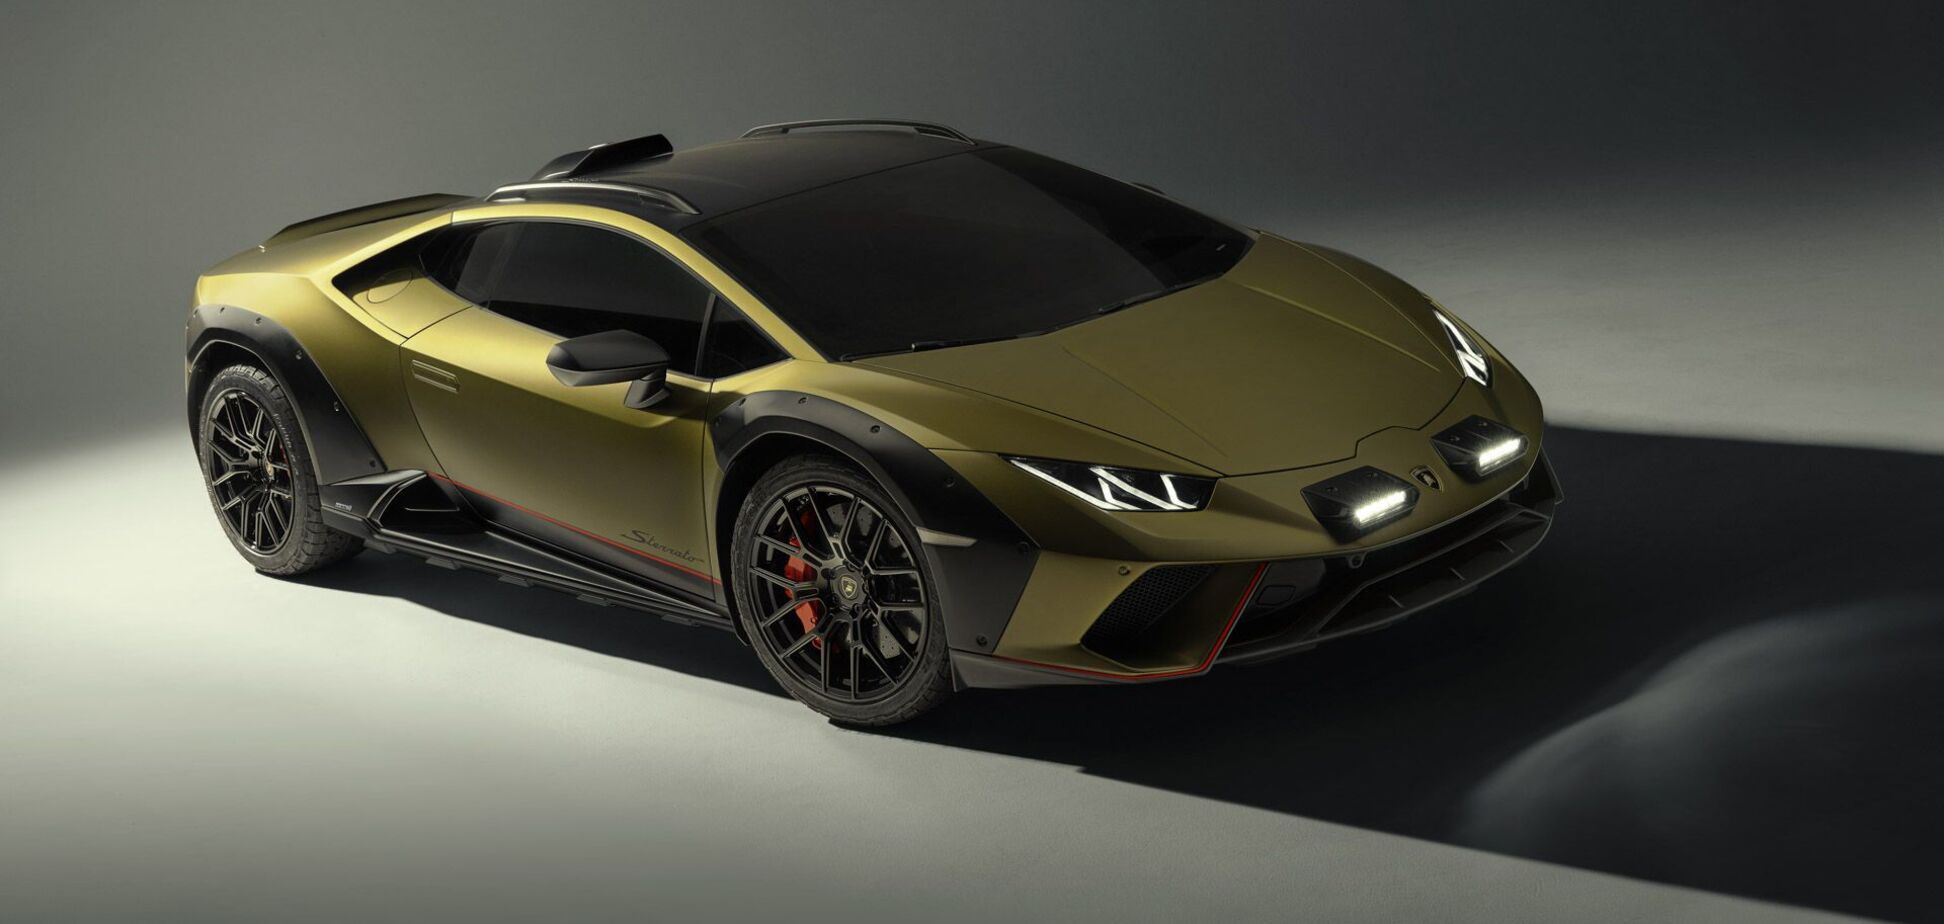 Lamborghini представила 'внедорожный' Huracan. Видео